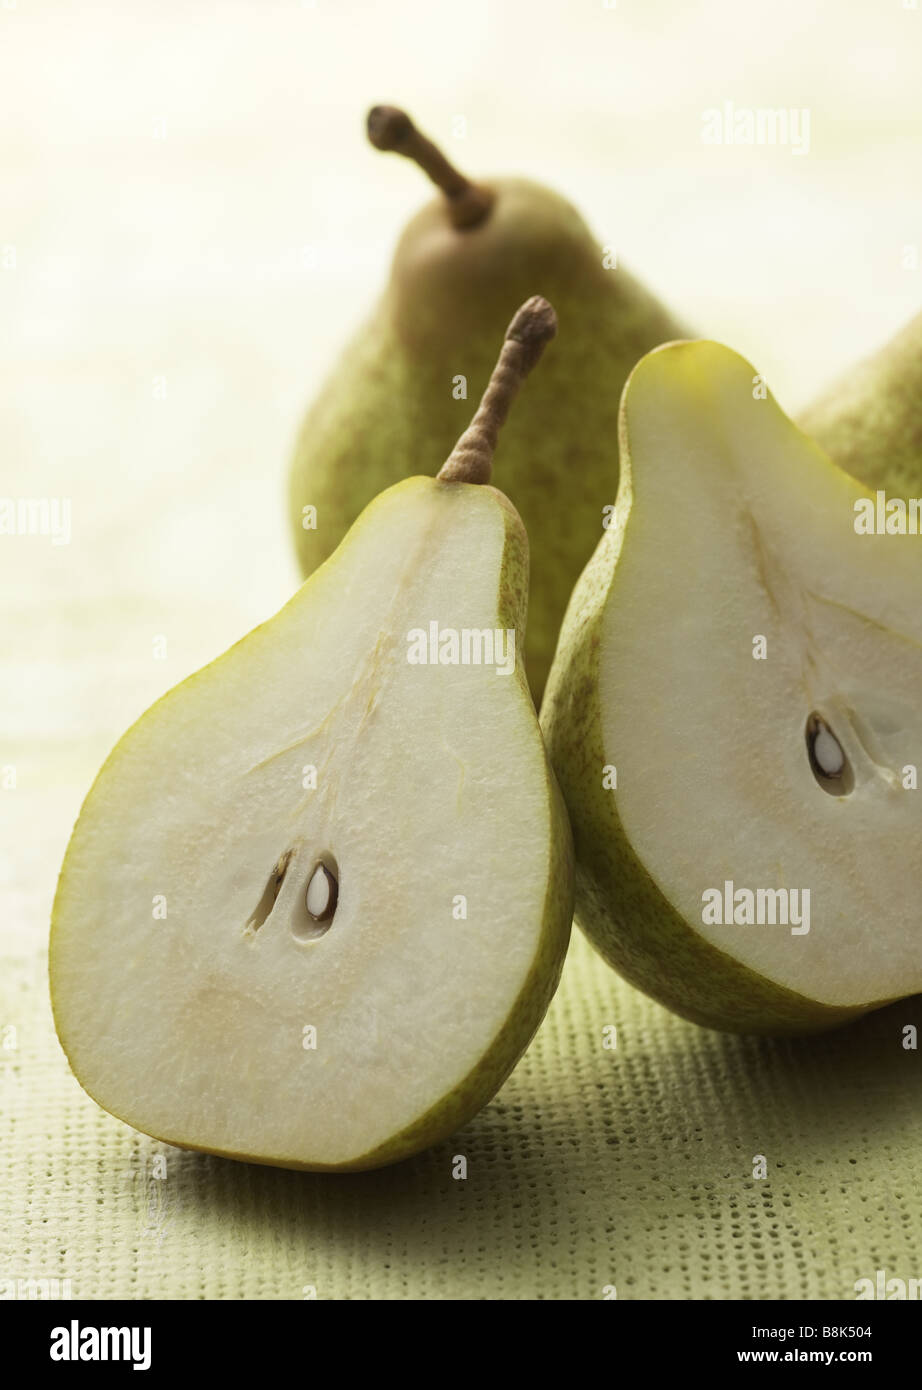 European Pear Stock Photo